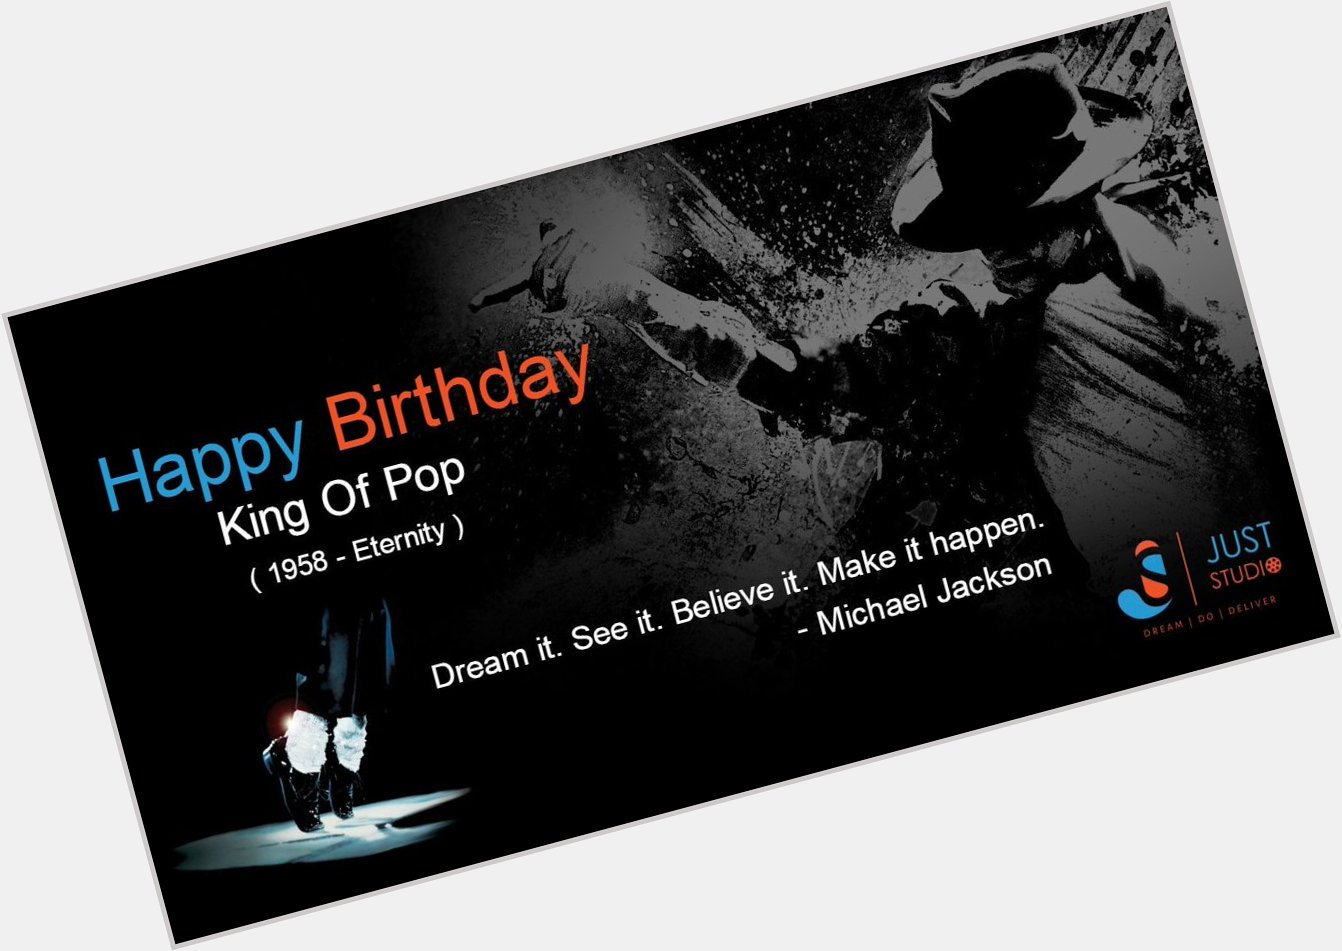 Happy birthday Michael Jackson...      